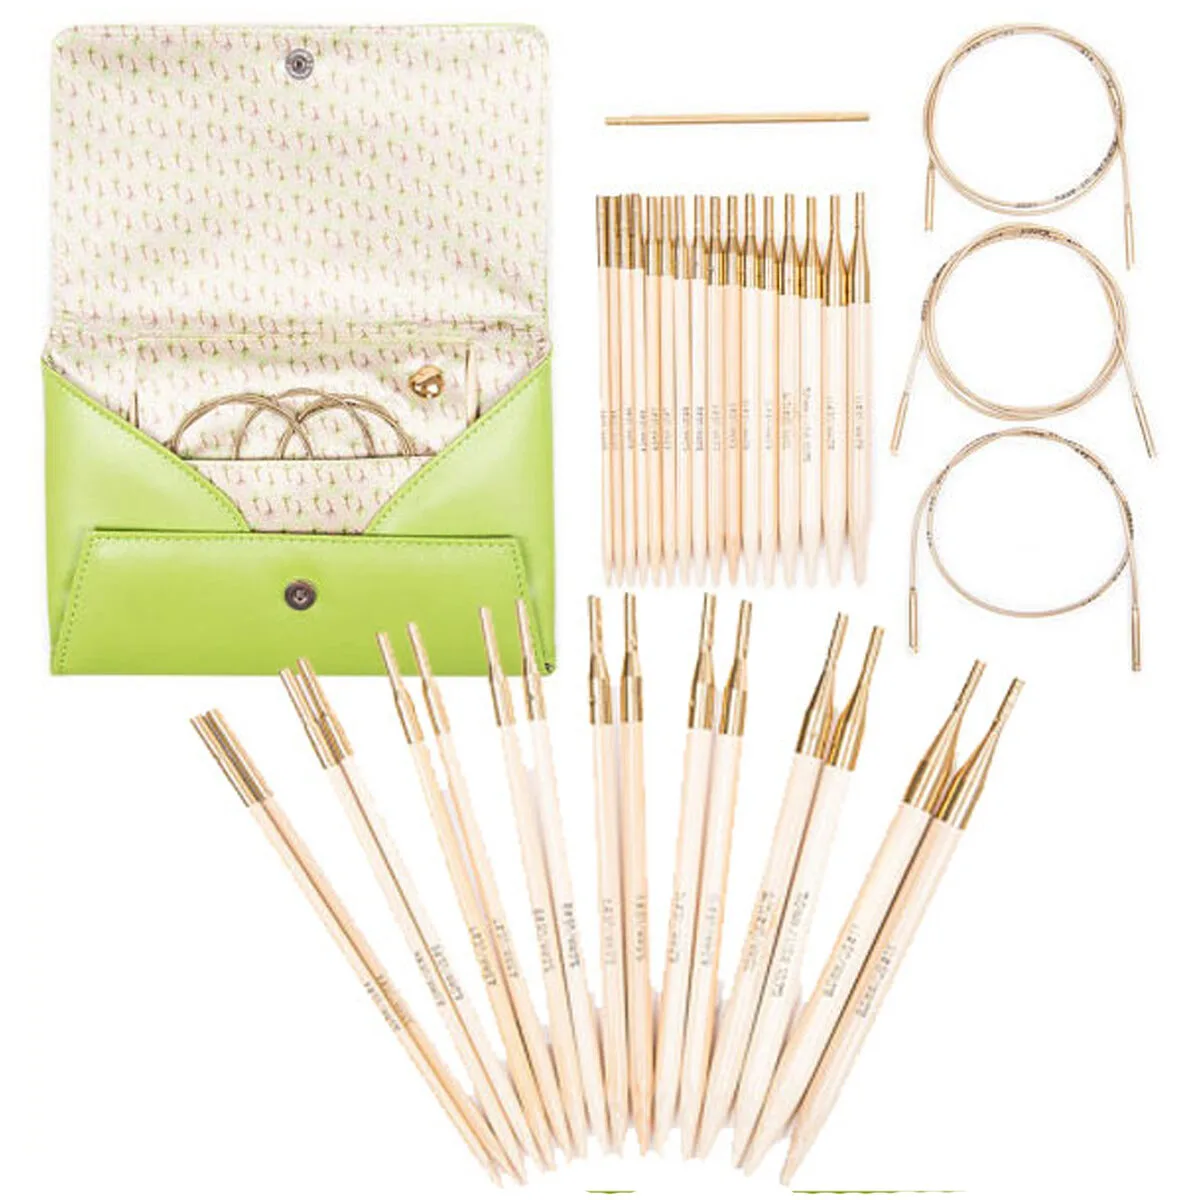  40 addi Rockets Circular Needles - US 7 - Knitting Needles  from addi : Arts, Crafts & Sewing